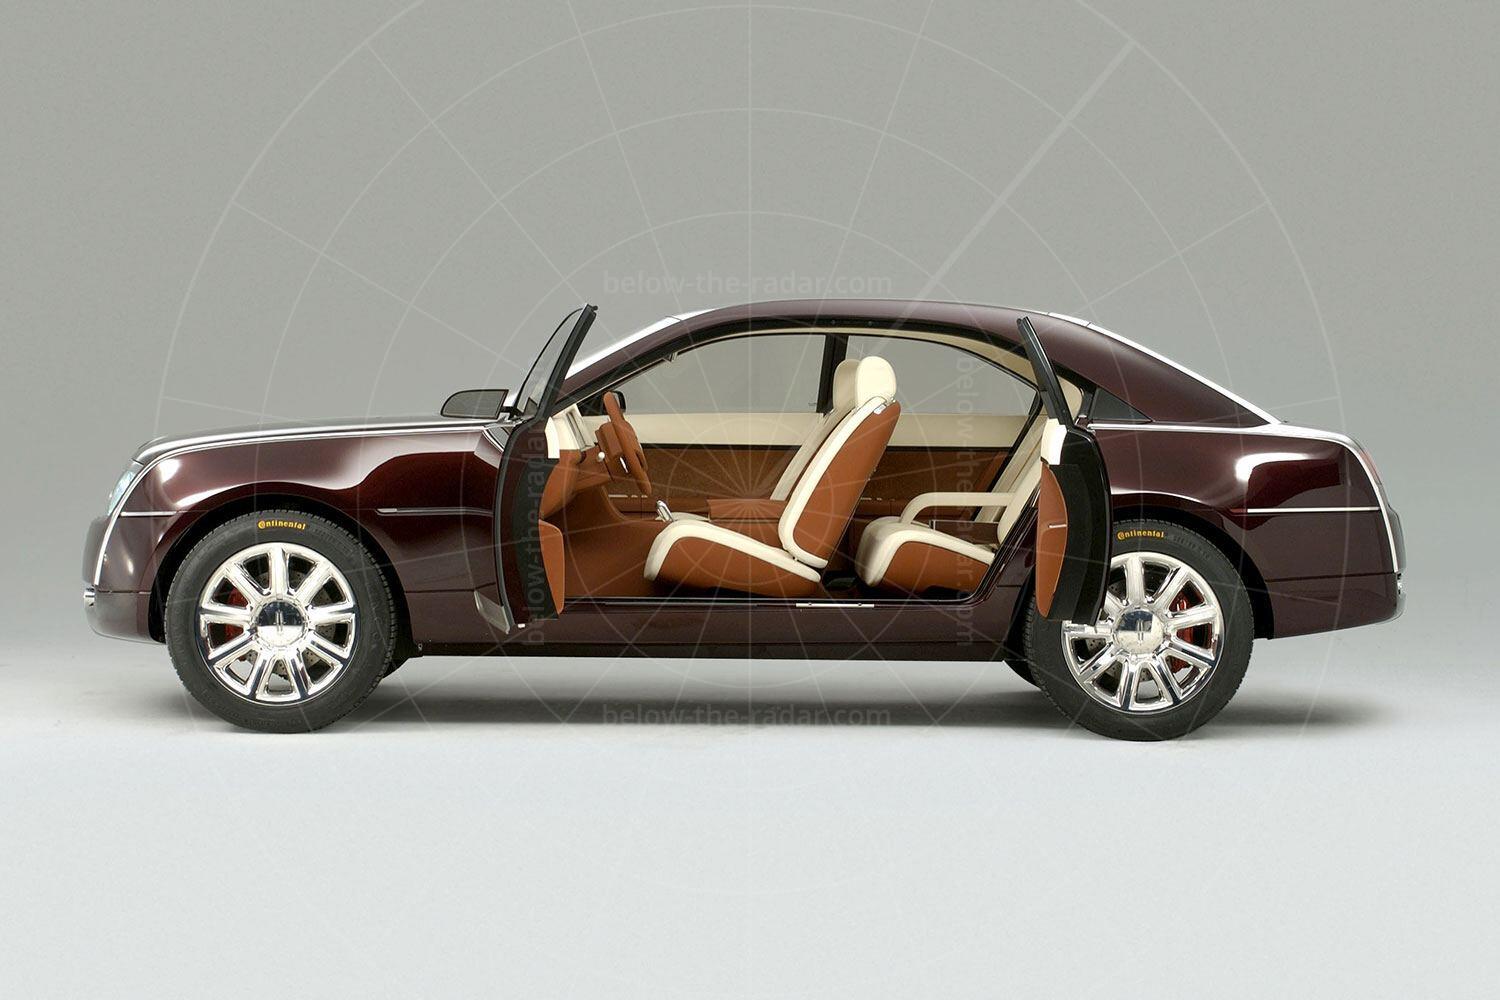 Lincoln Navicross concept Pic: Lincoln | Lincoln Navicross concept